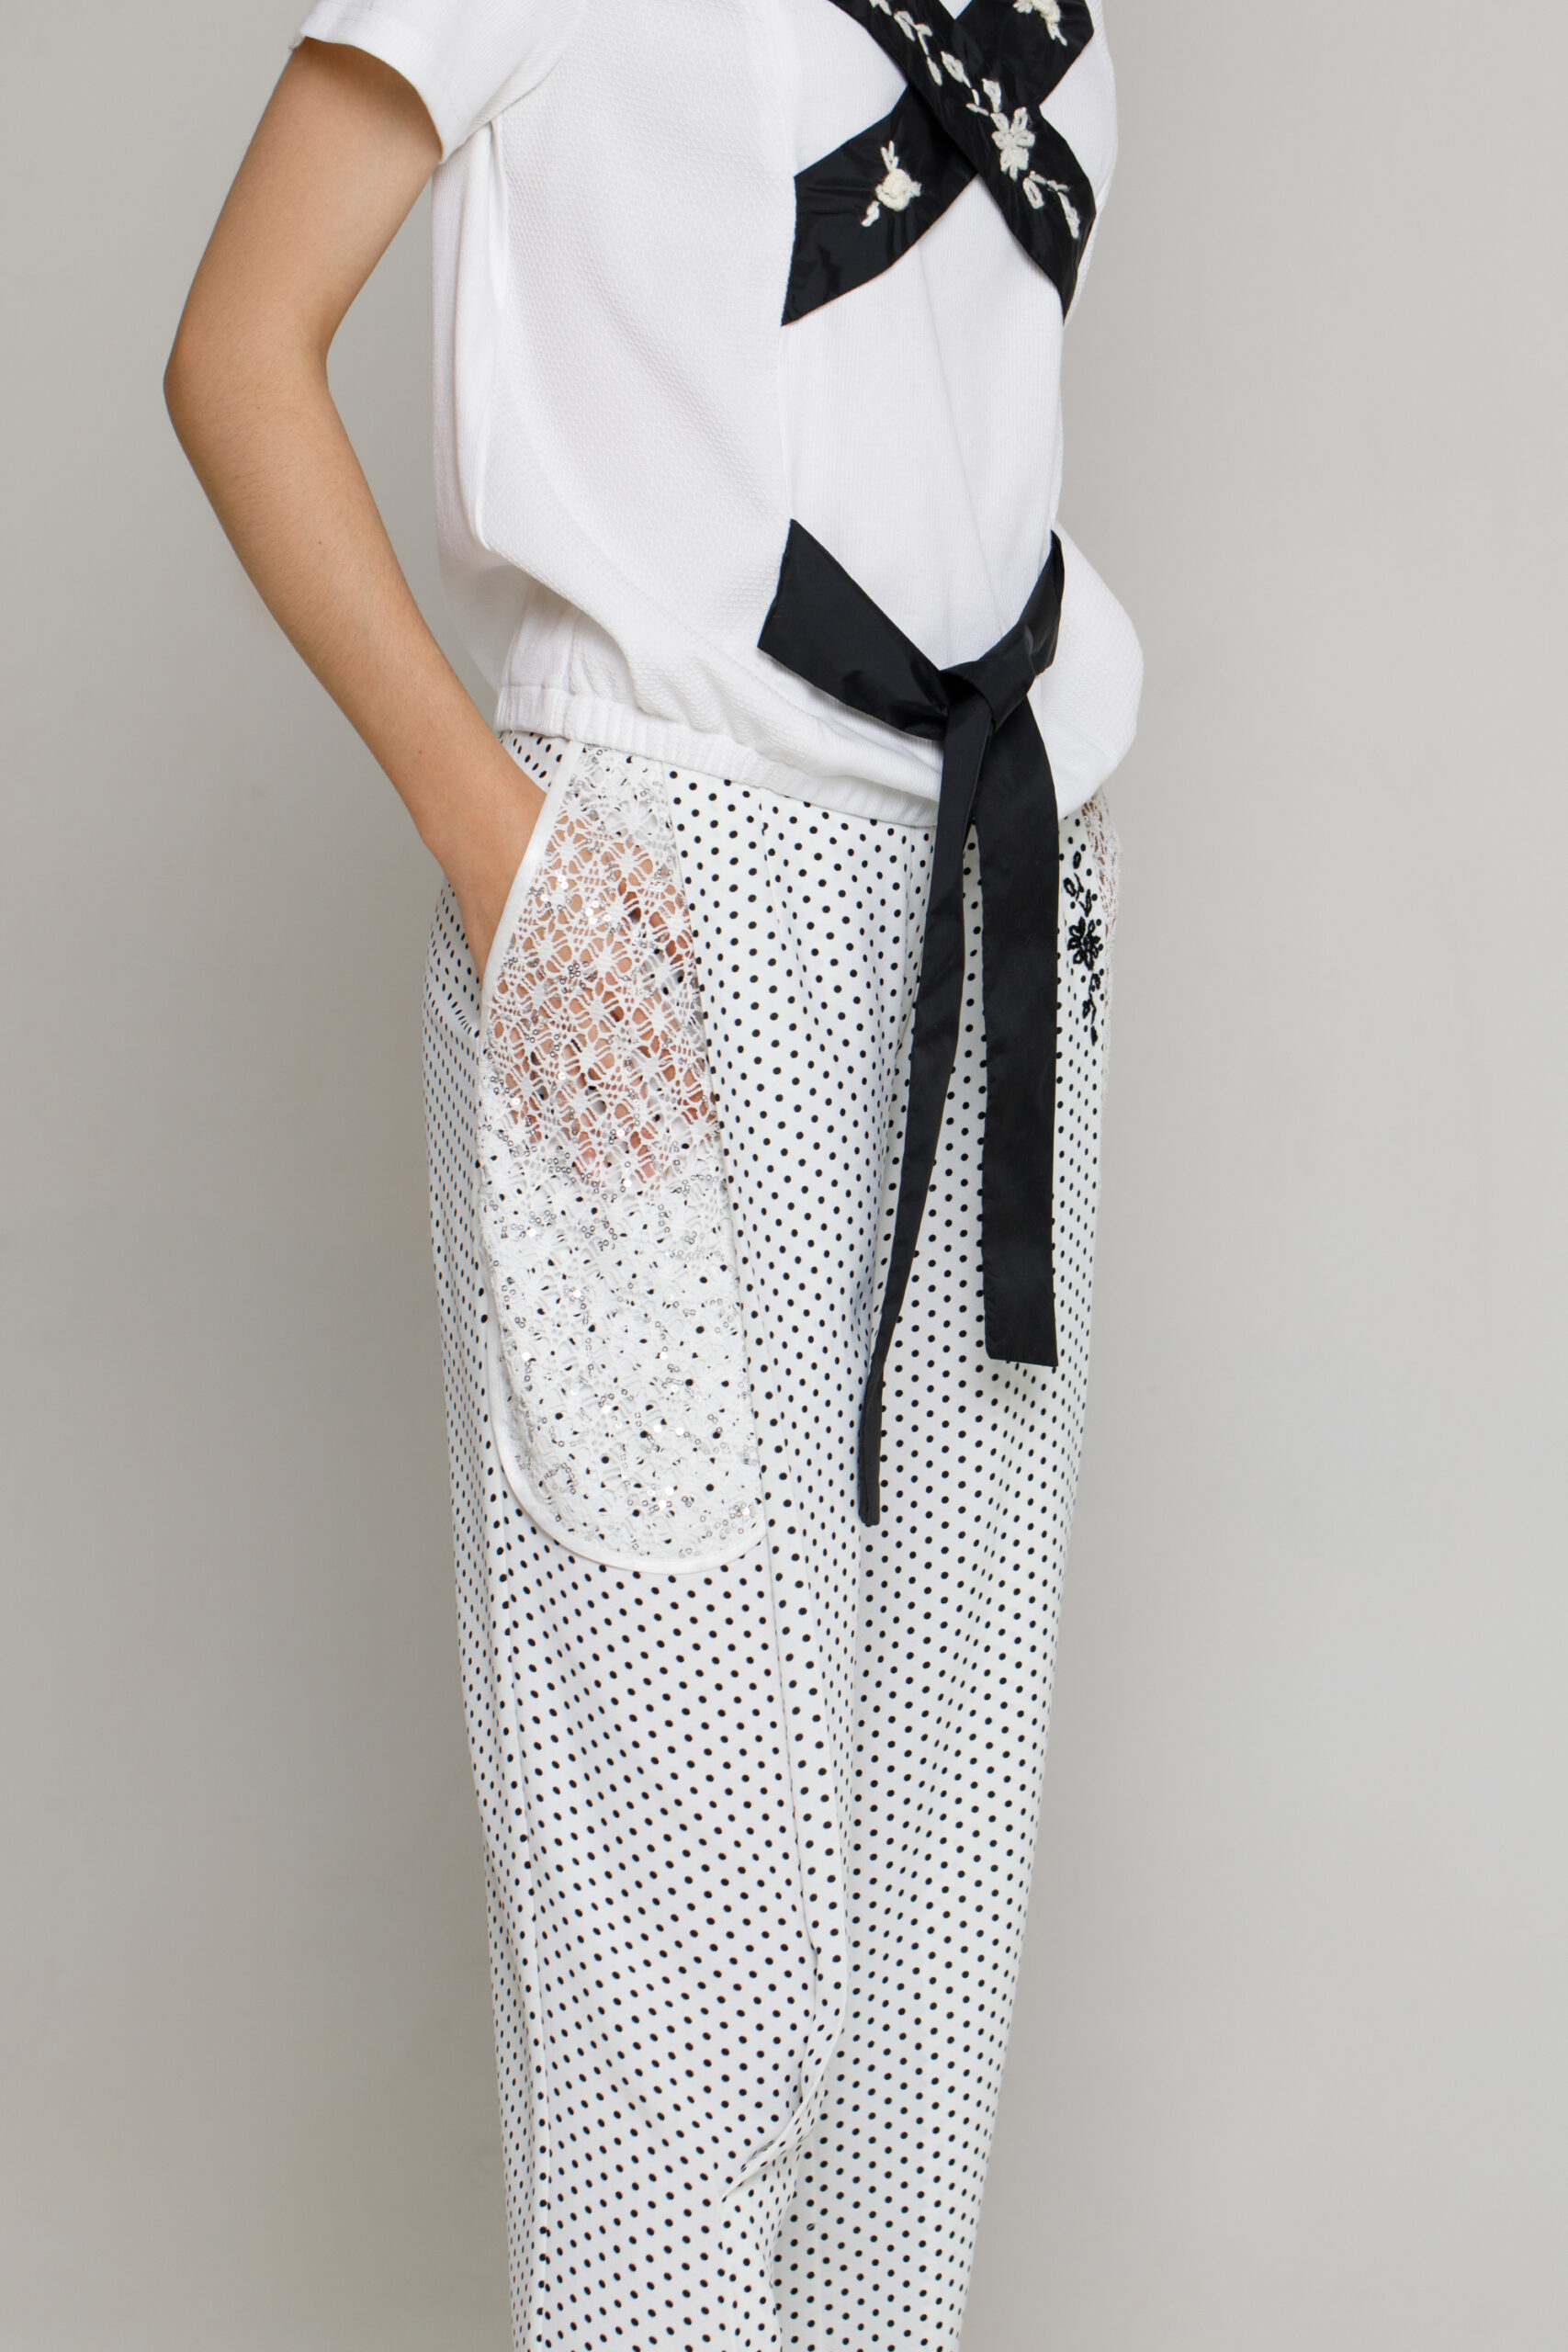 Pantalon ROCO elegant alb cu buline si buzunar din dantela. Materiale naturale, design unicat, cu broderie si aplicatii handmade